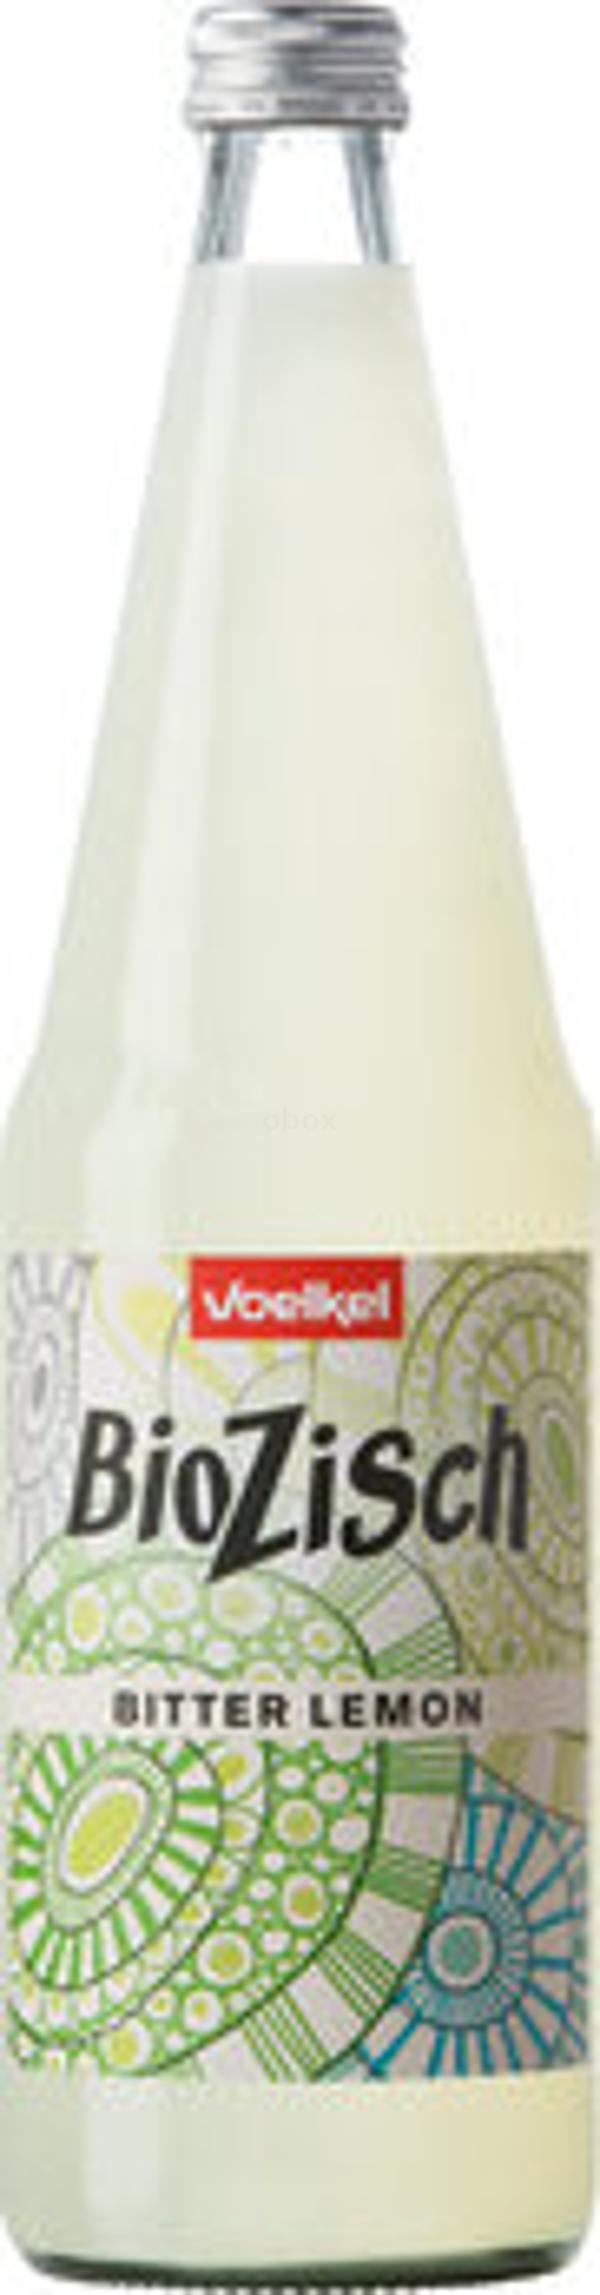 Produktfoto zu BioZisch Bitter-Lemon, 0,7l